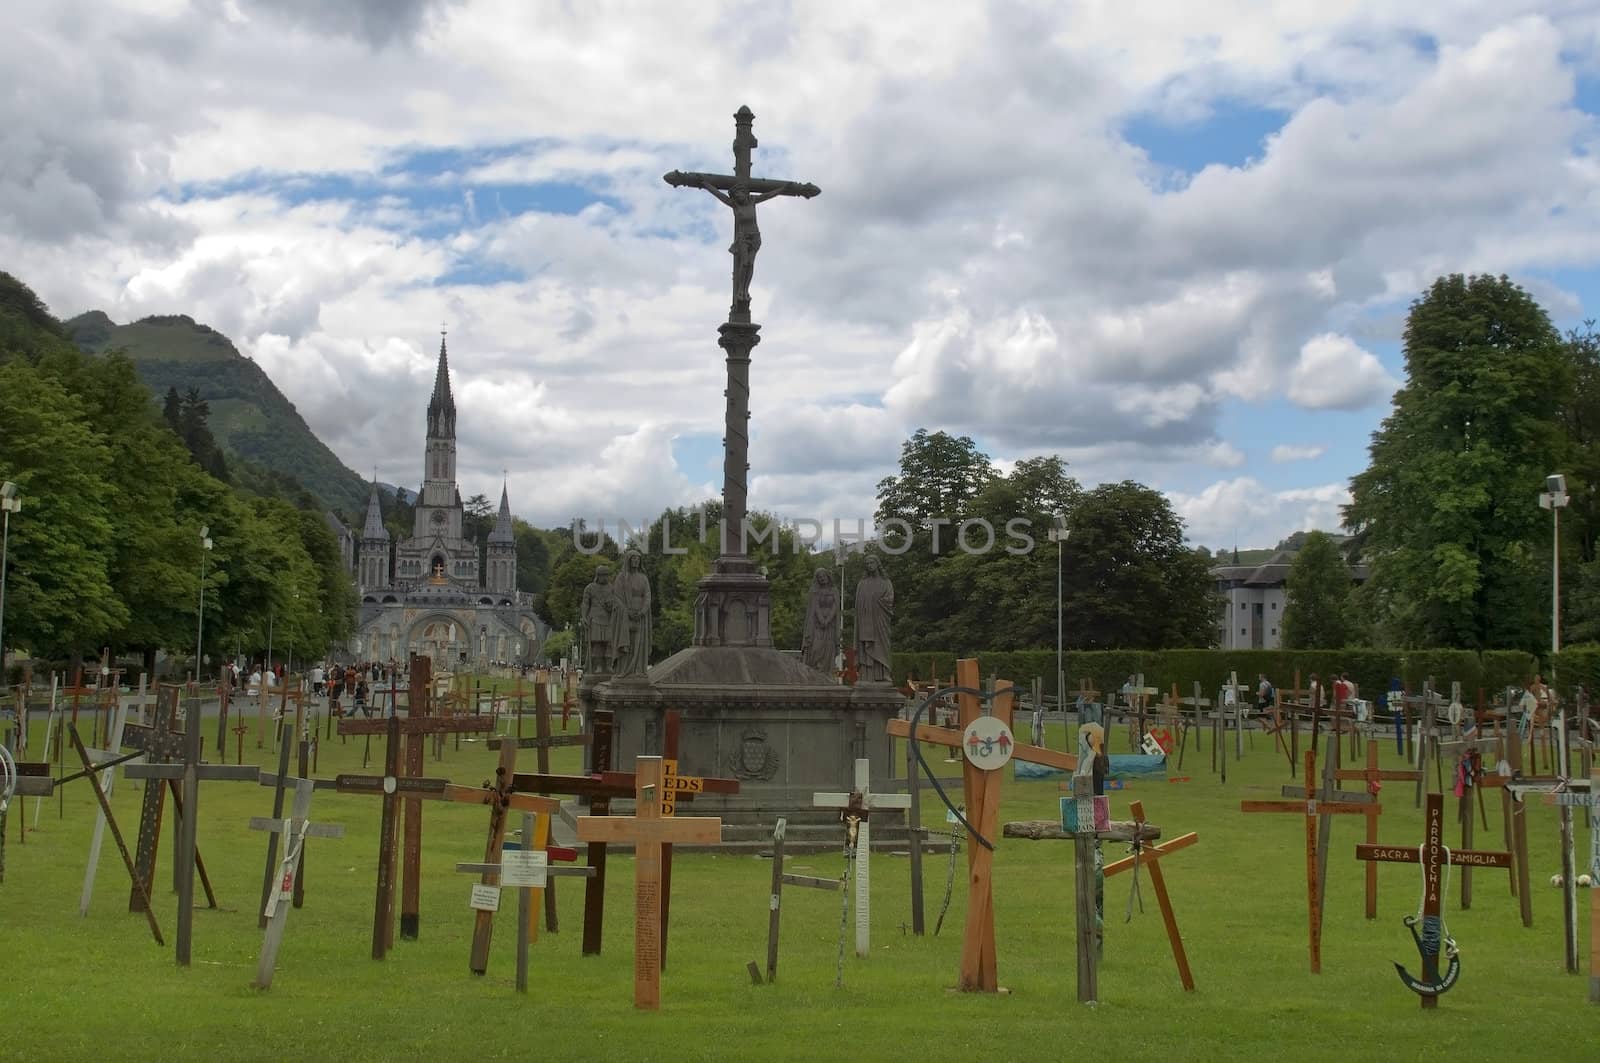 Lourdes , garden of crosses by irisphoto4